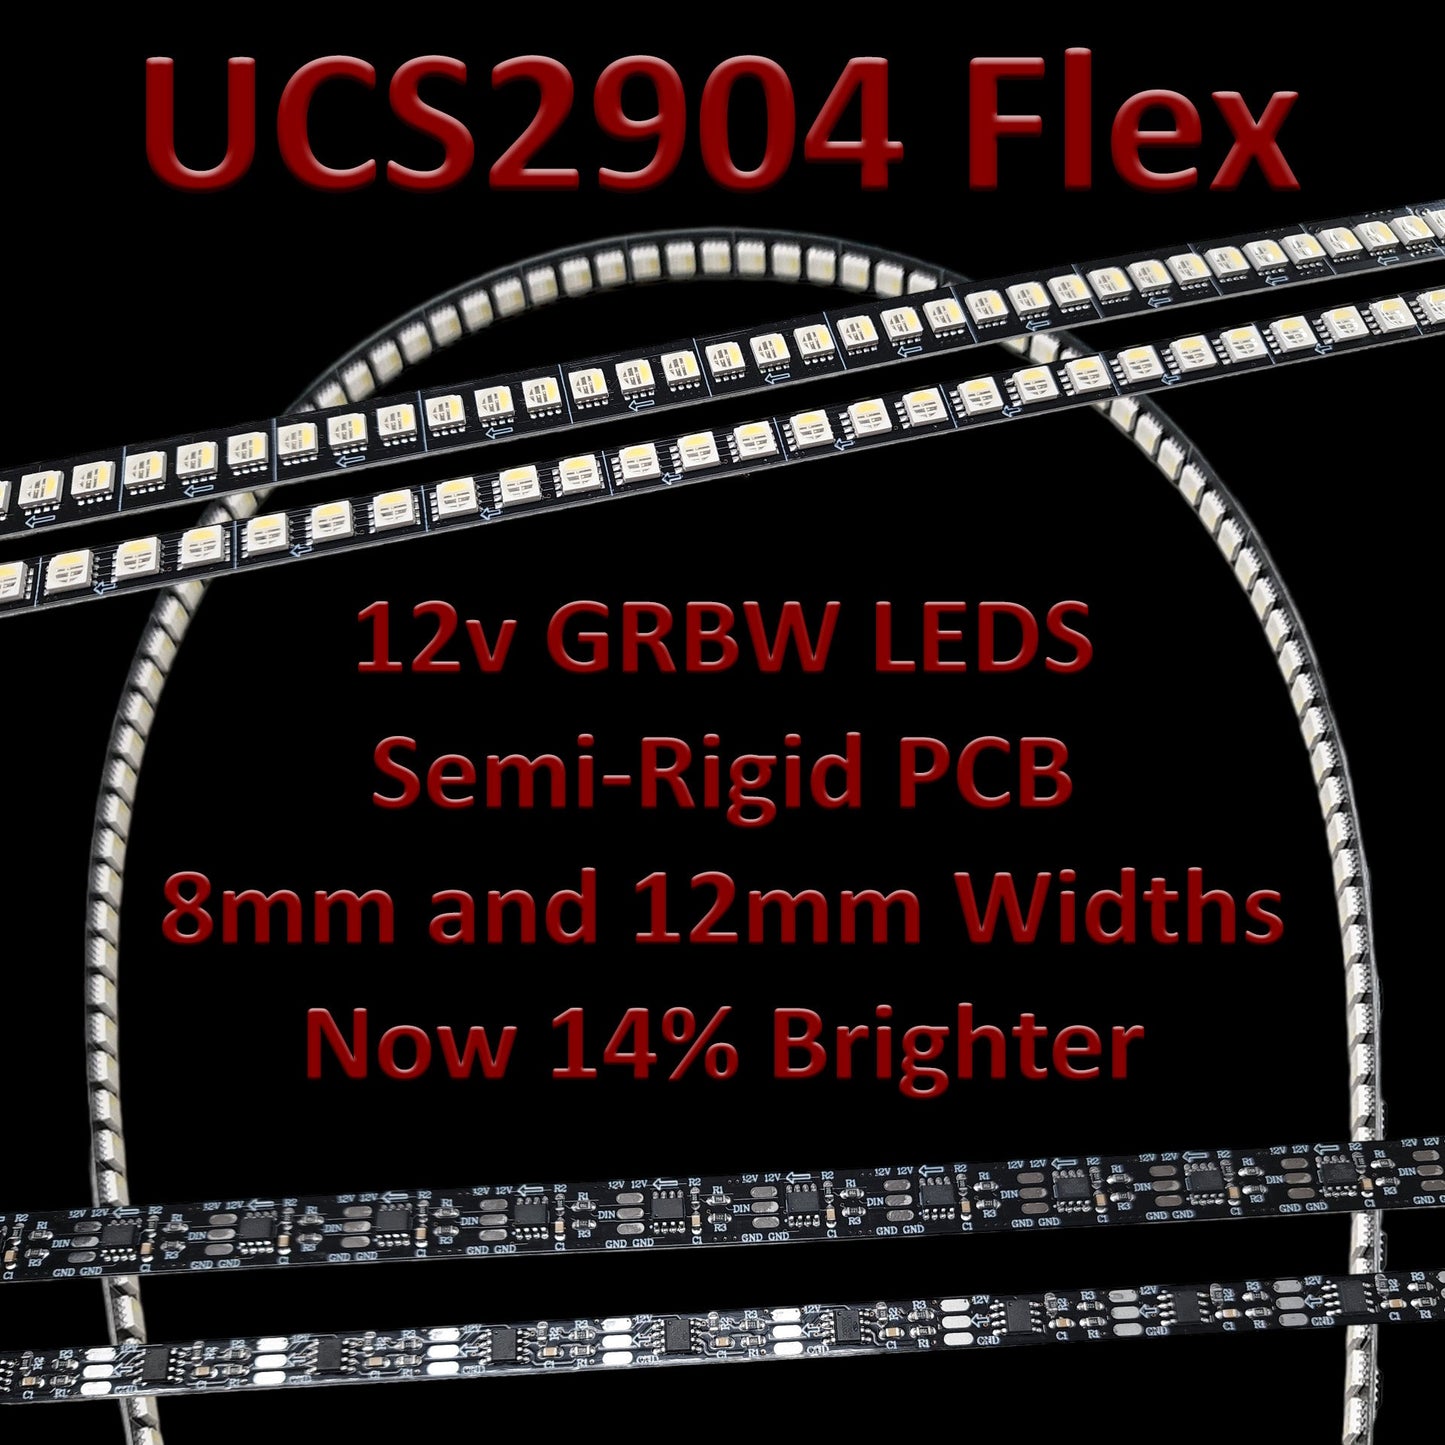 UCS2904 Flex, RGBW LED Strips on Semi-Rigid PCB